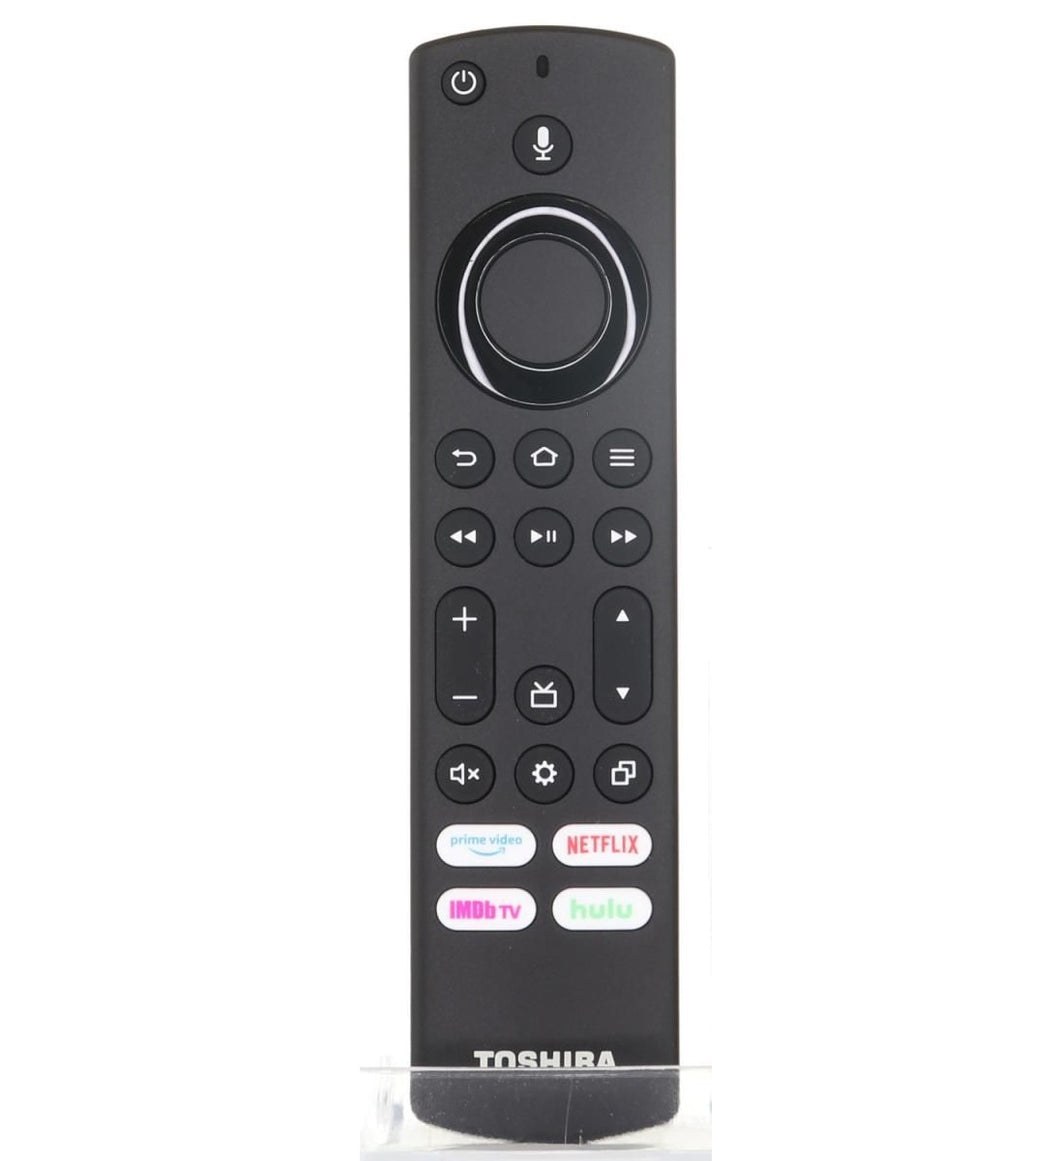 CTRC1US21 Toshiba Fire TV Remote Control For 32LF221C19 43LED2160P 43LF421U19 Like New